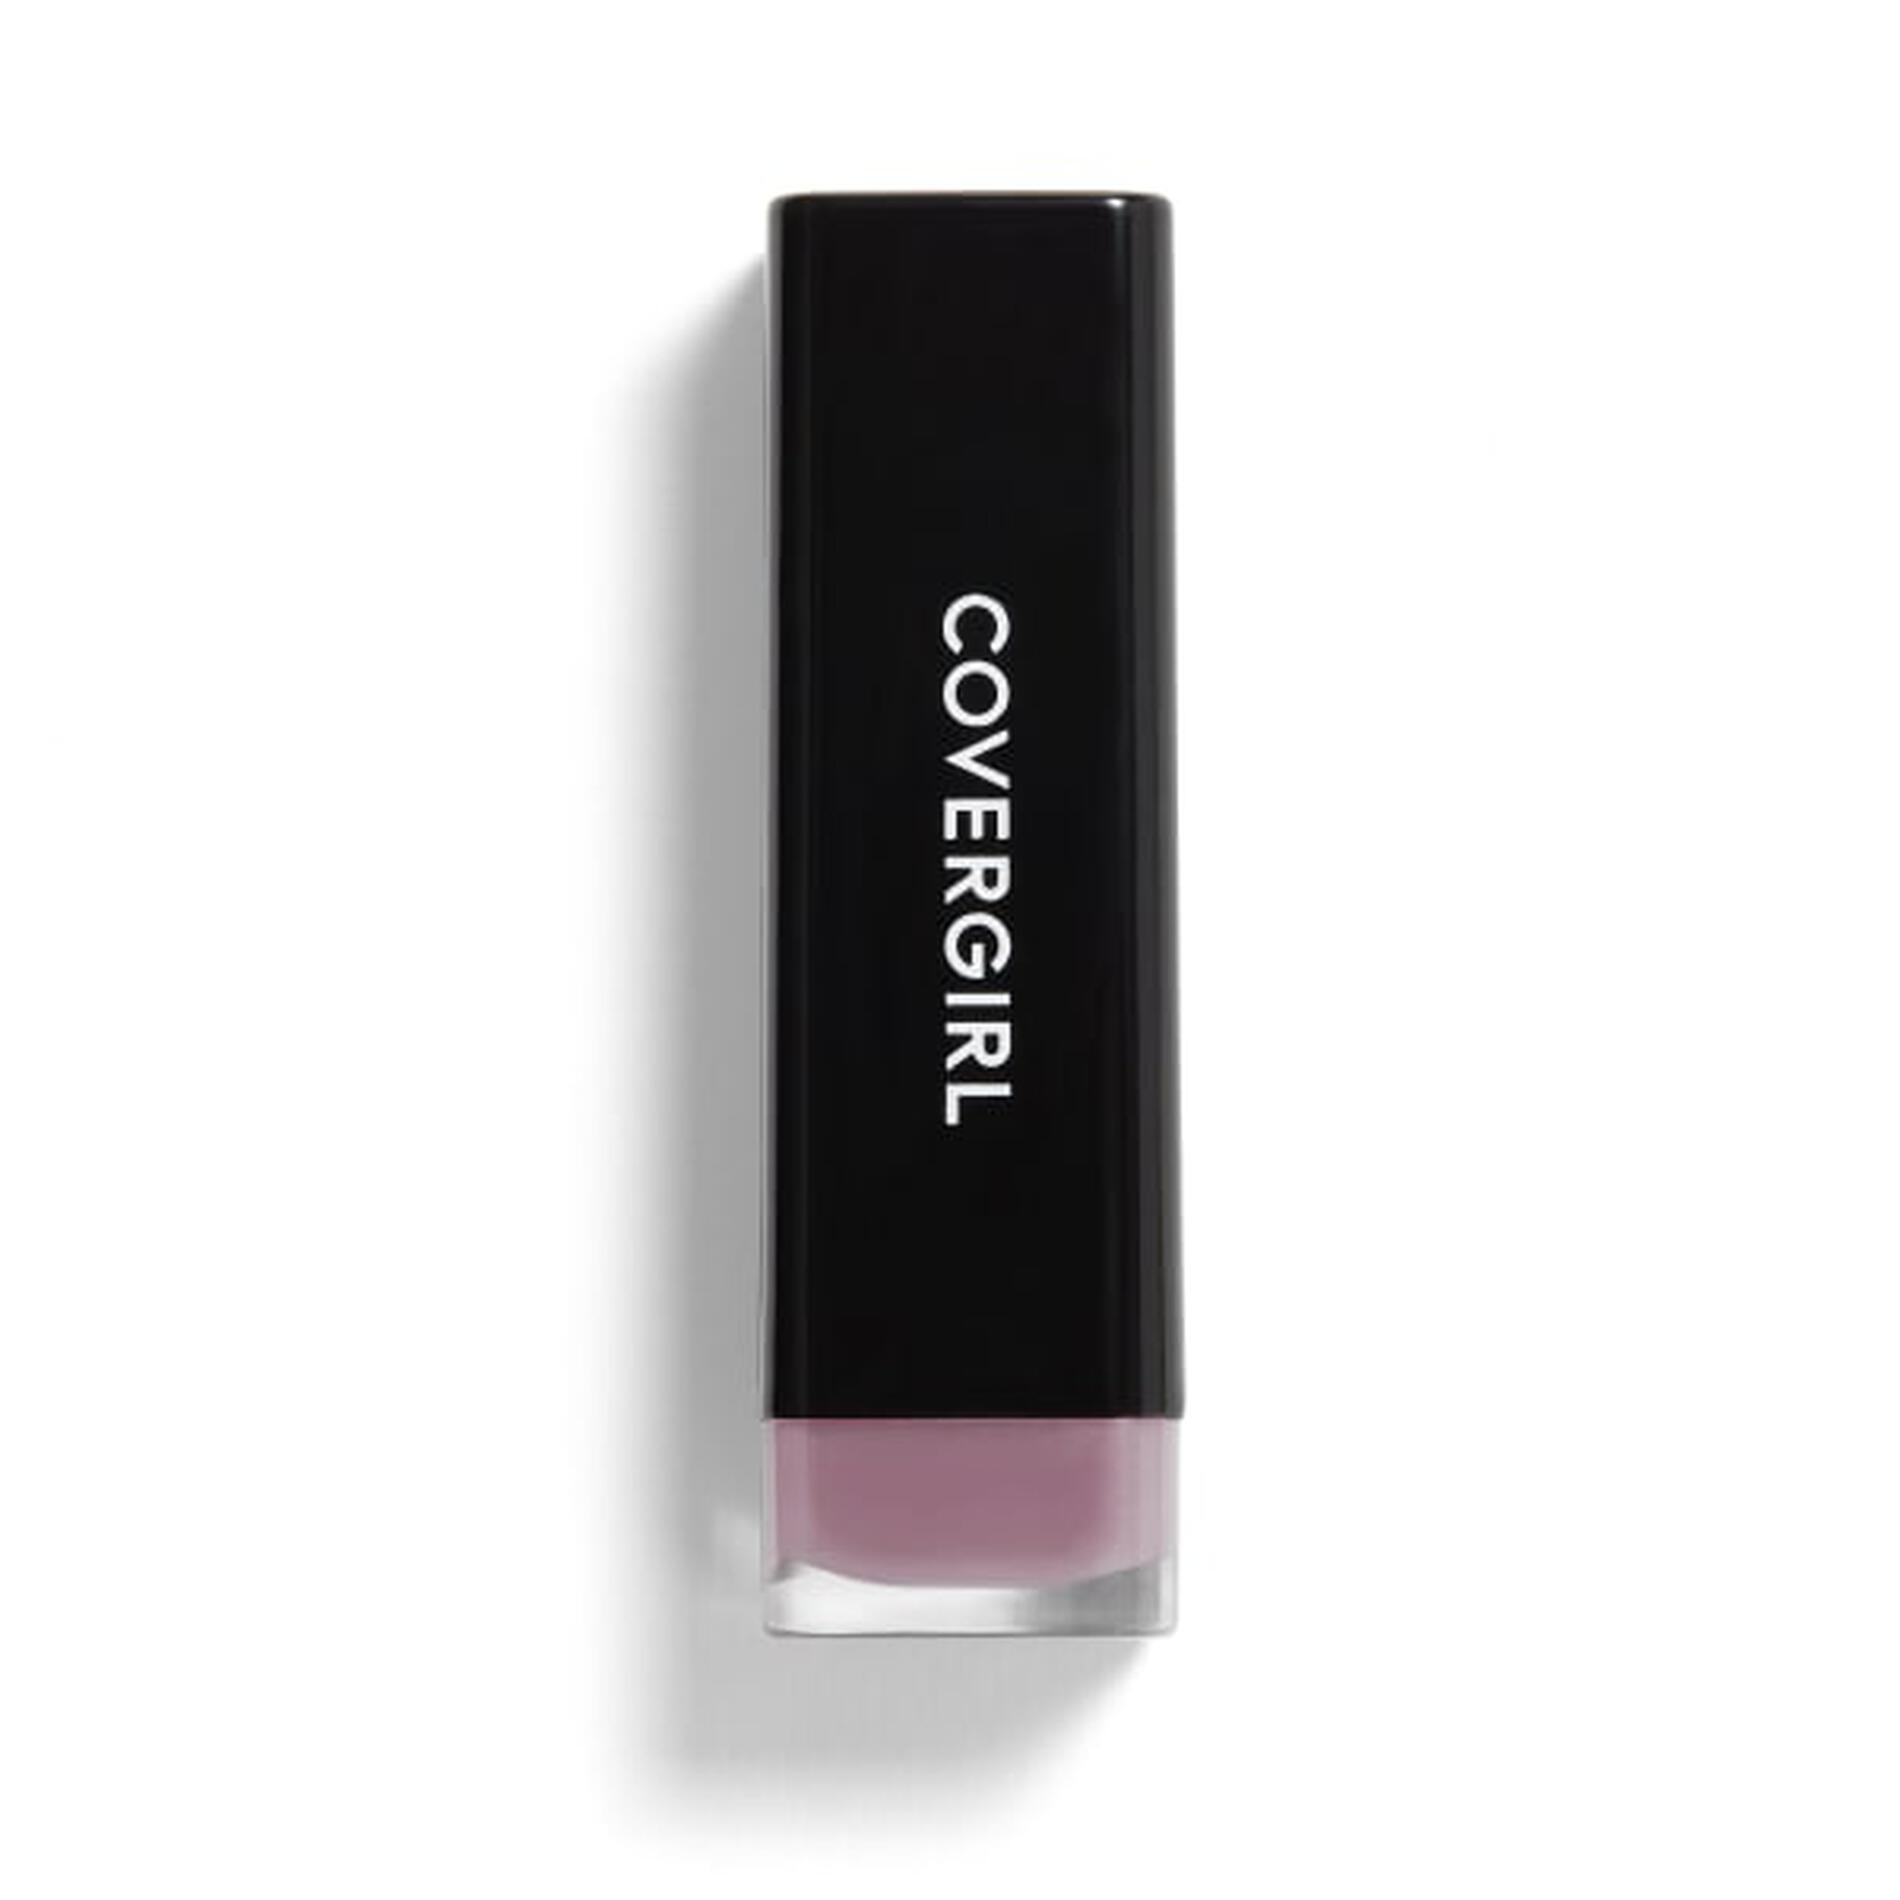  COVERGIRL Exhibitionist Lipstick Cream, Romance Mauve 265